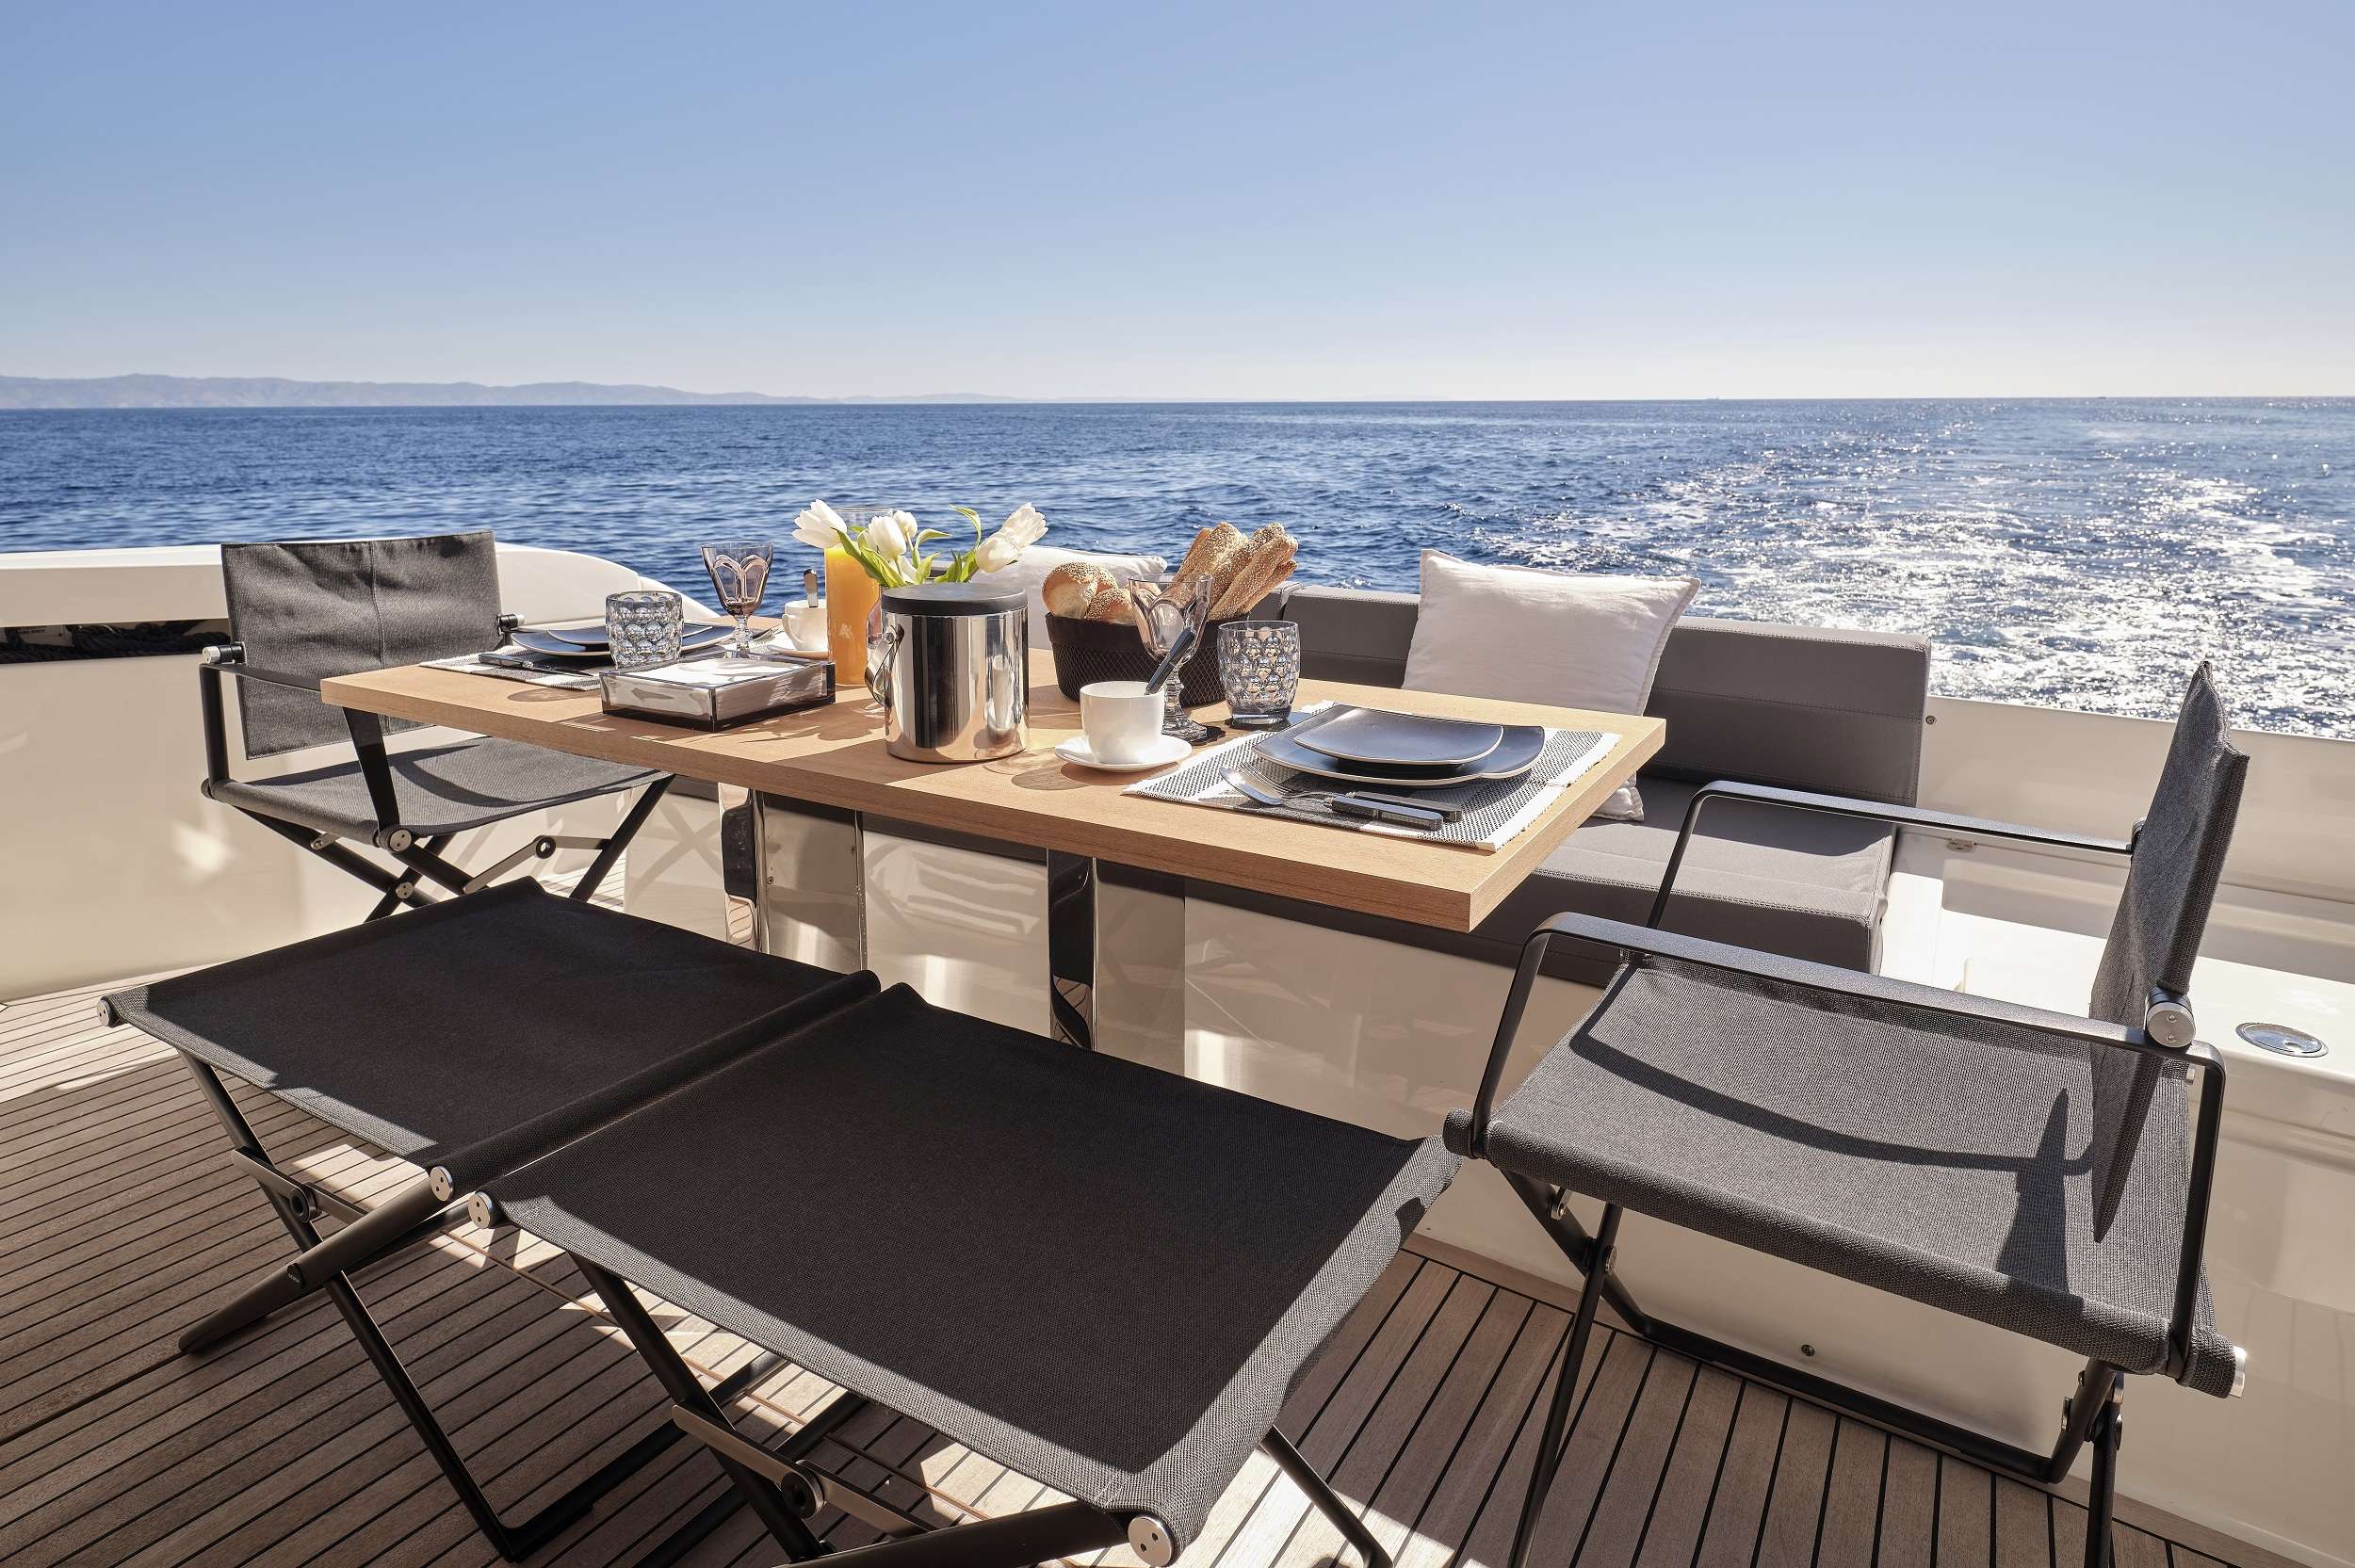 EL PETAS Yacht Charter - Aft deck morning view